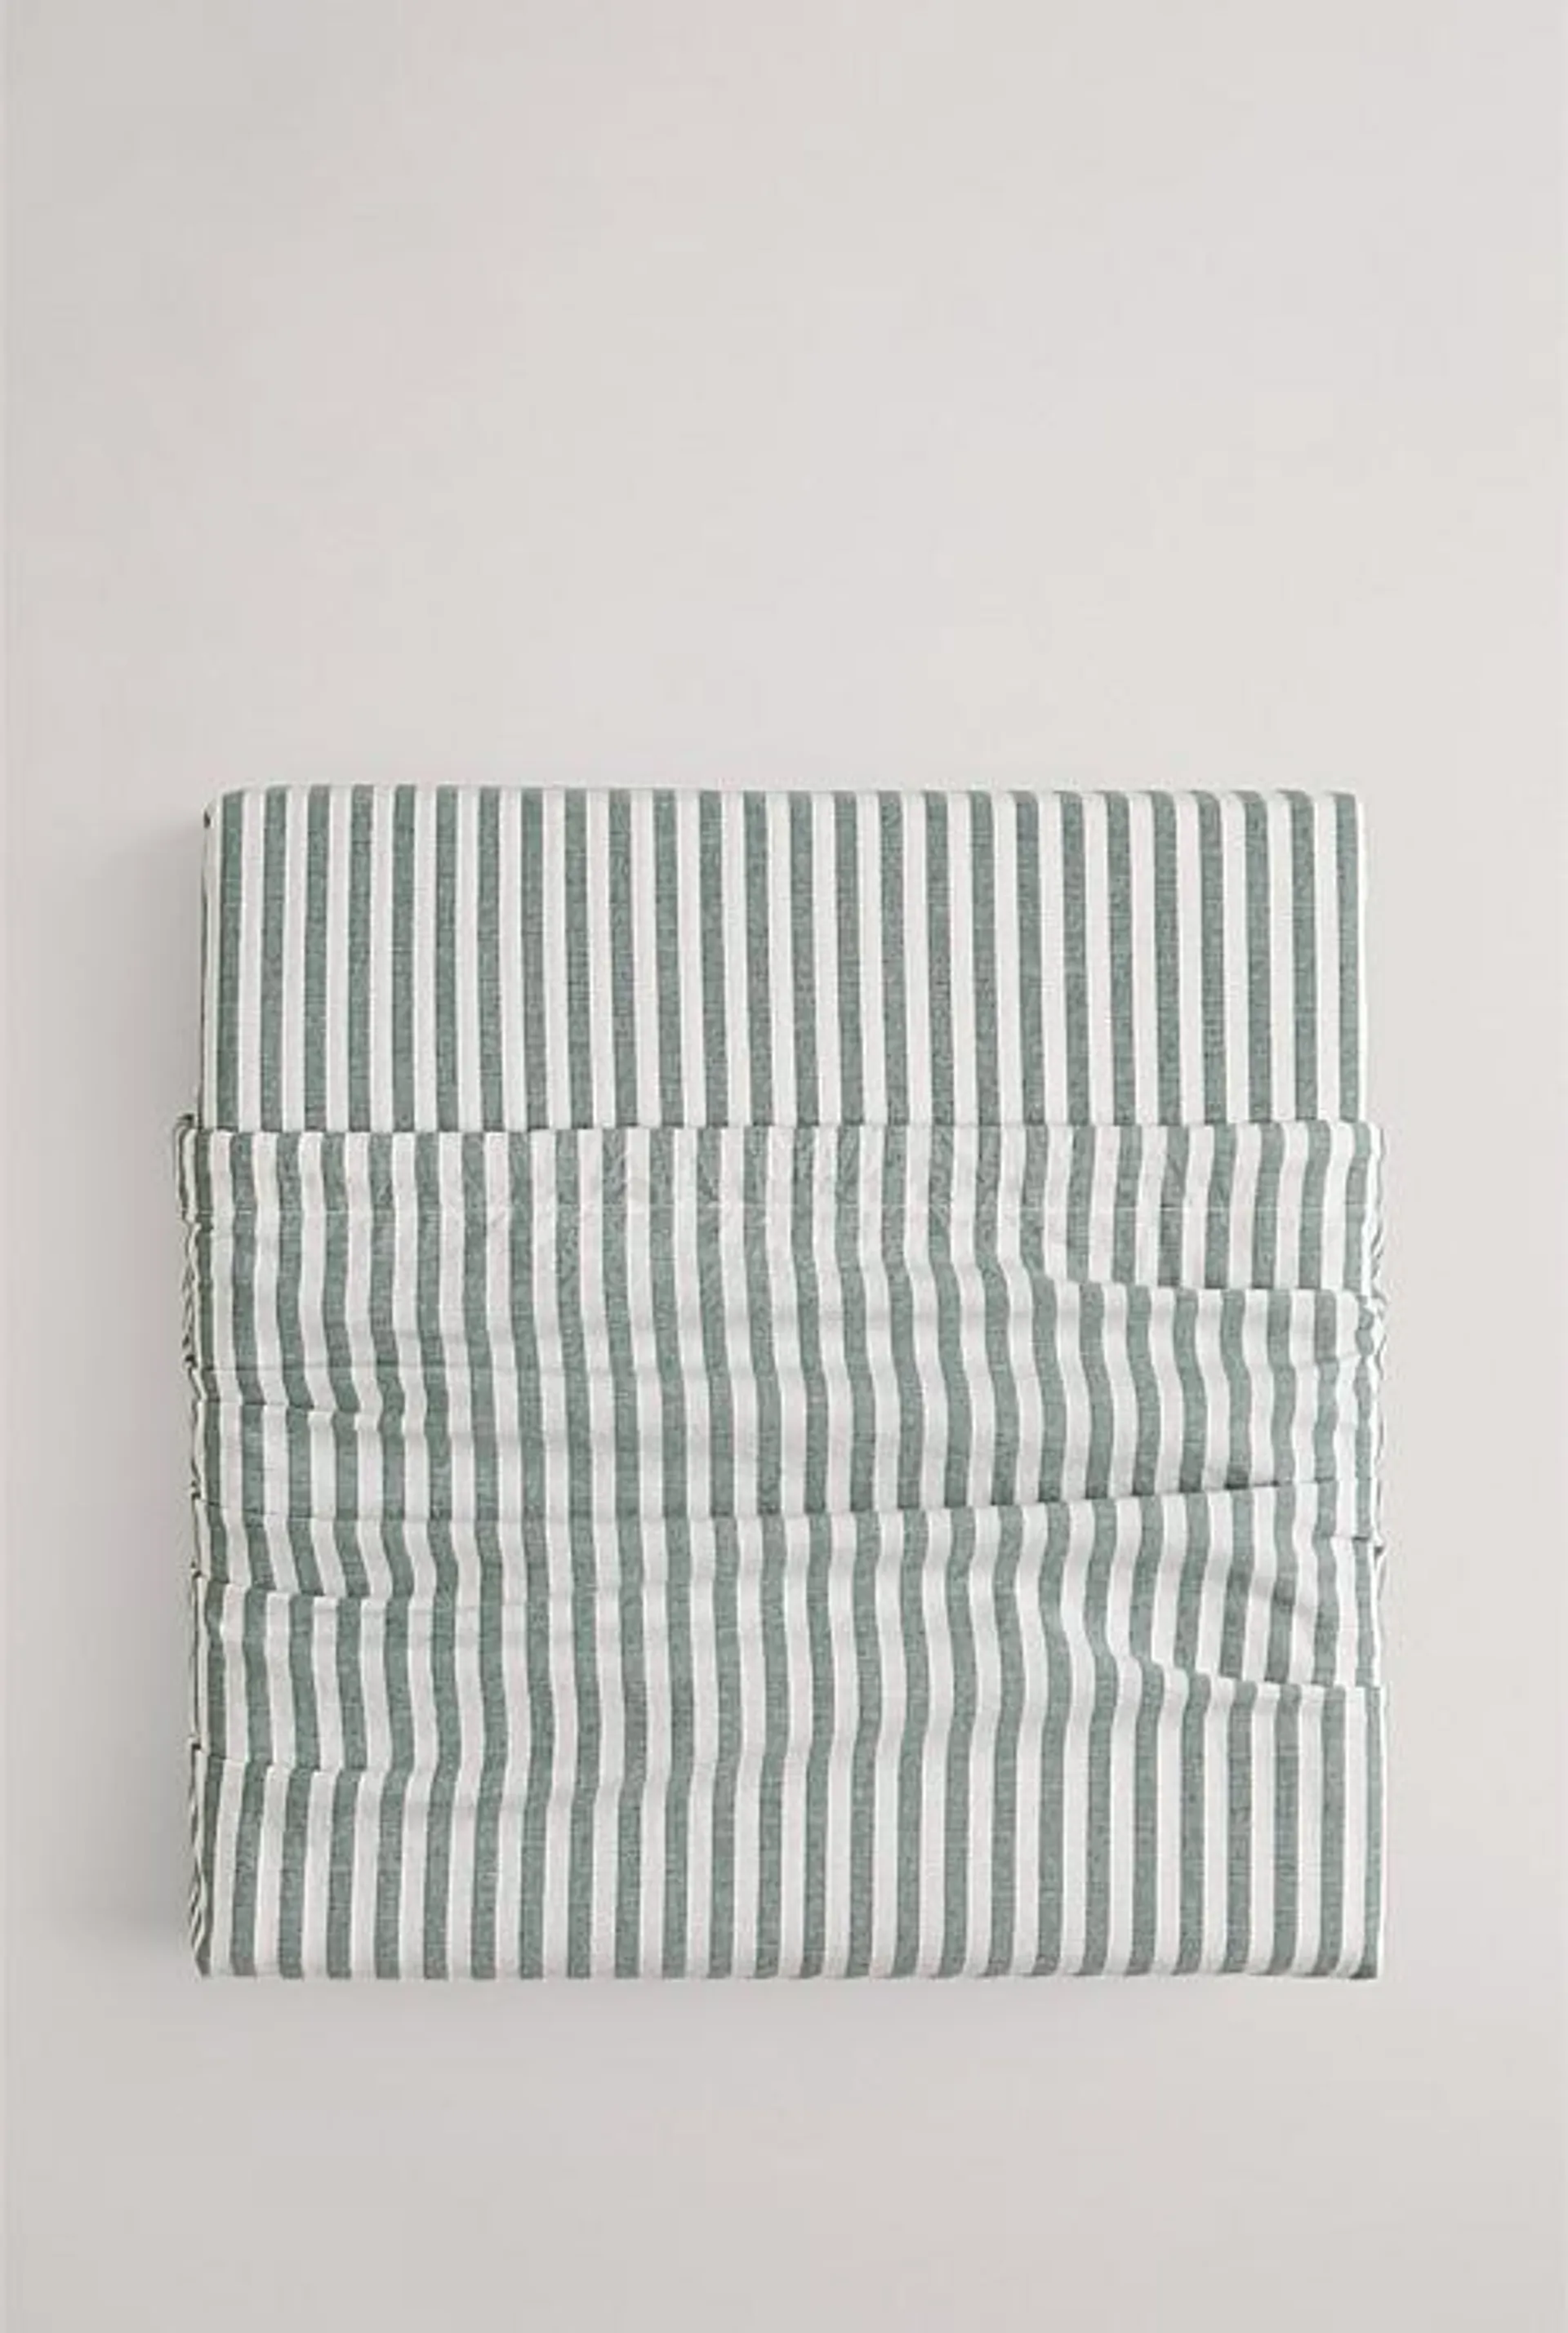 Brae Australian Cotton Stripe Queen Quilt Cover